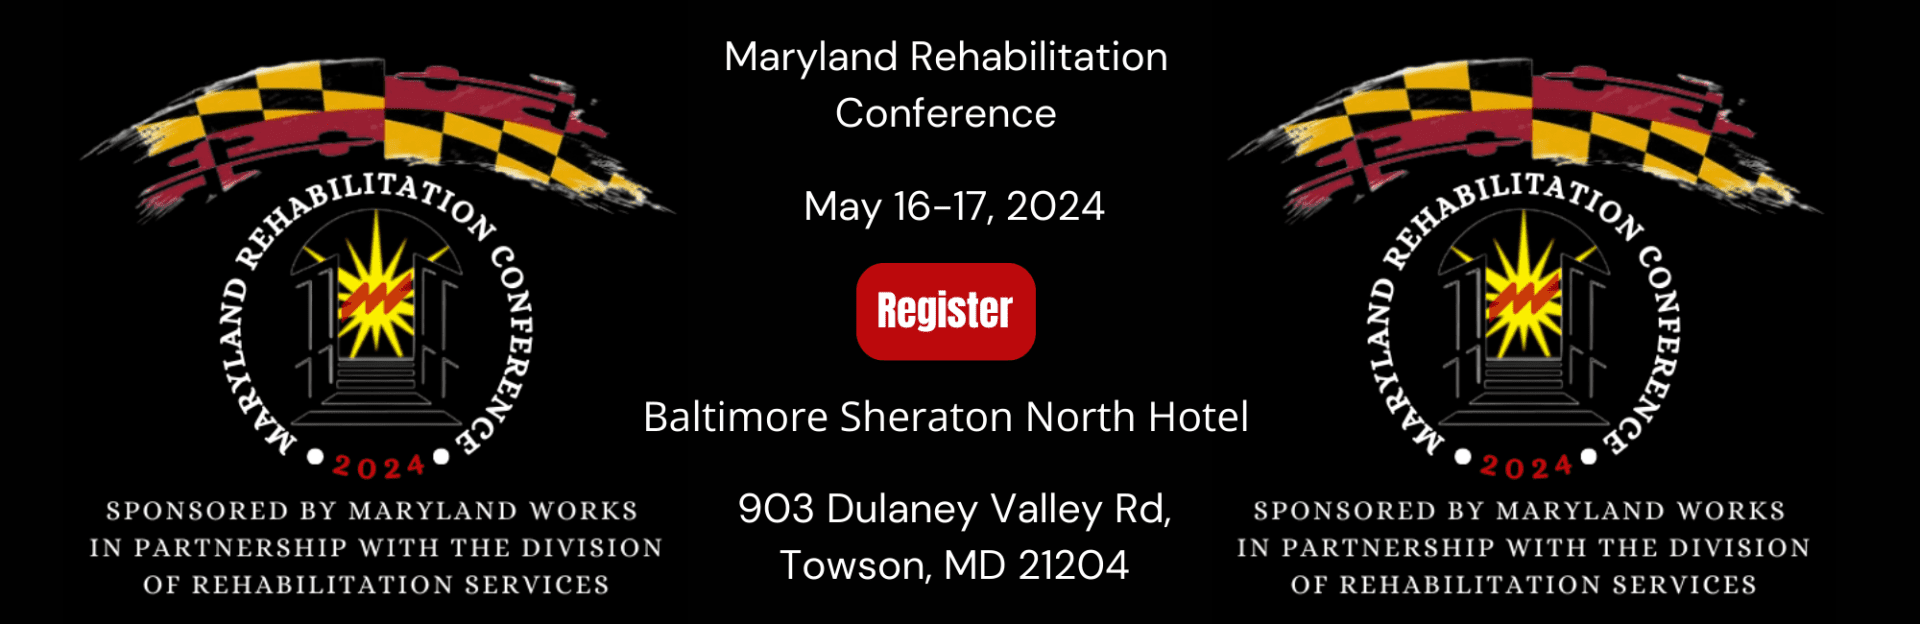 Maryland Rehabilitation Conference Event 2024